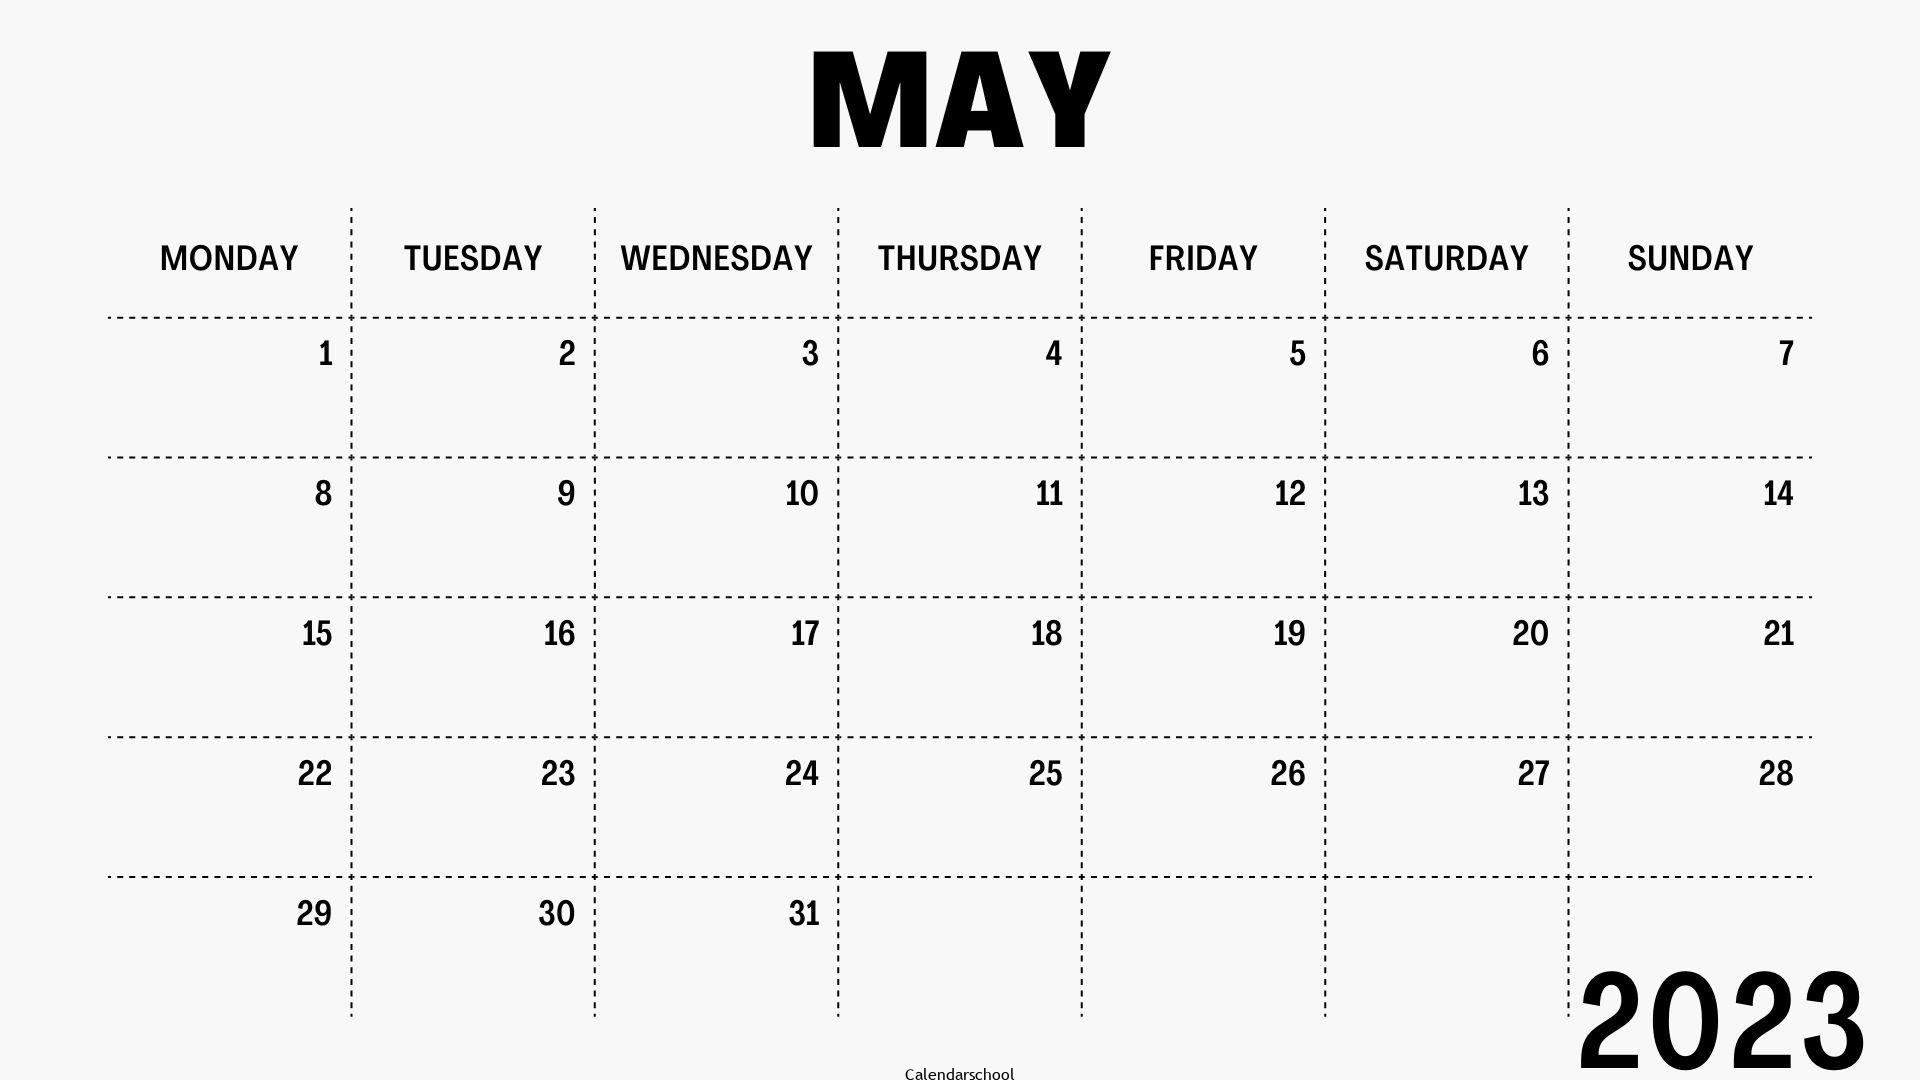 May 2023 Blank Printable Calendar